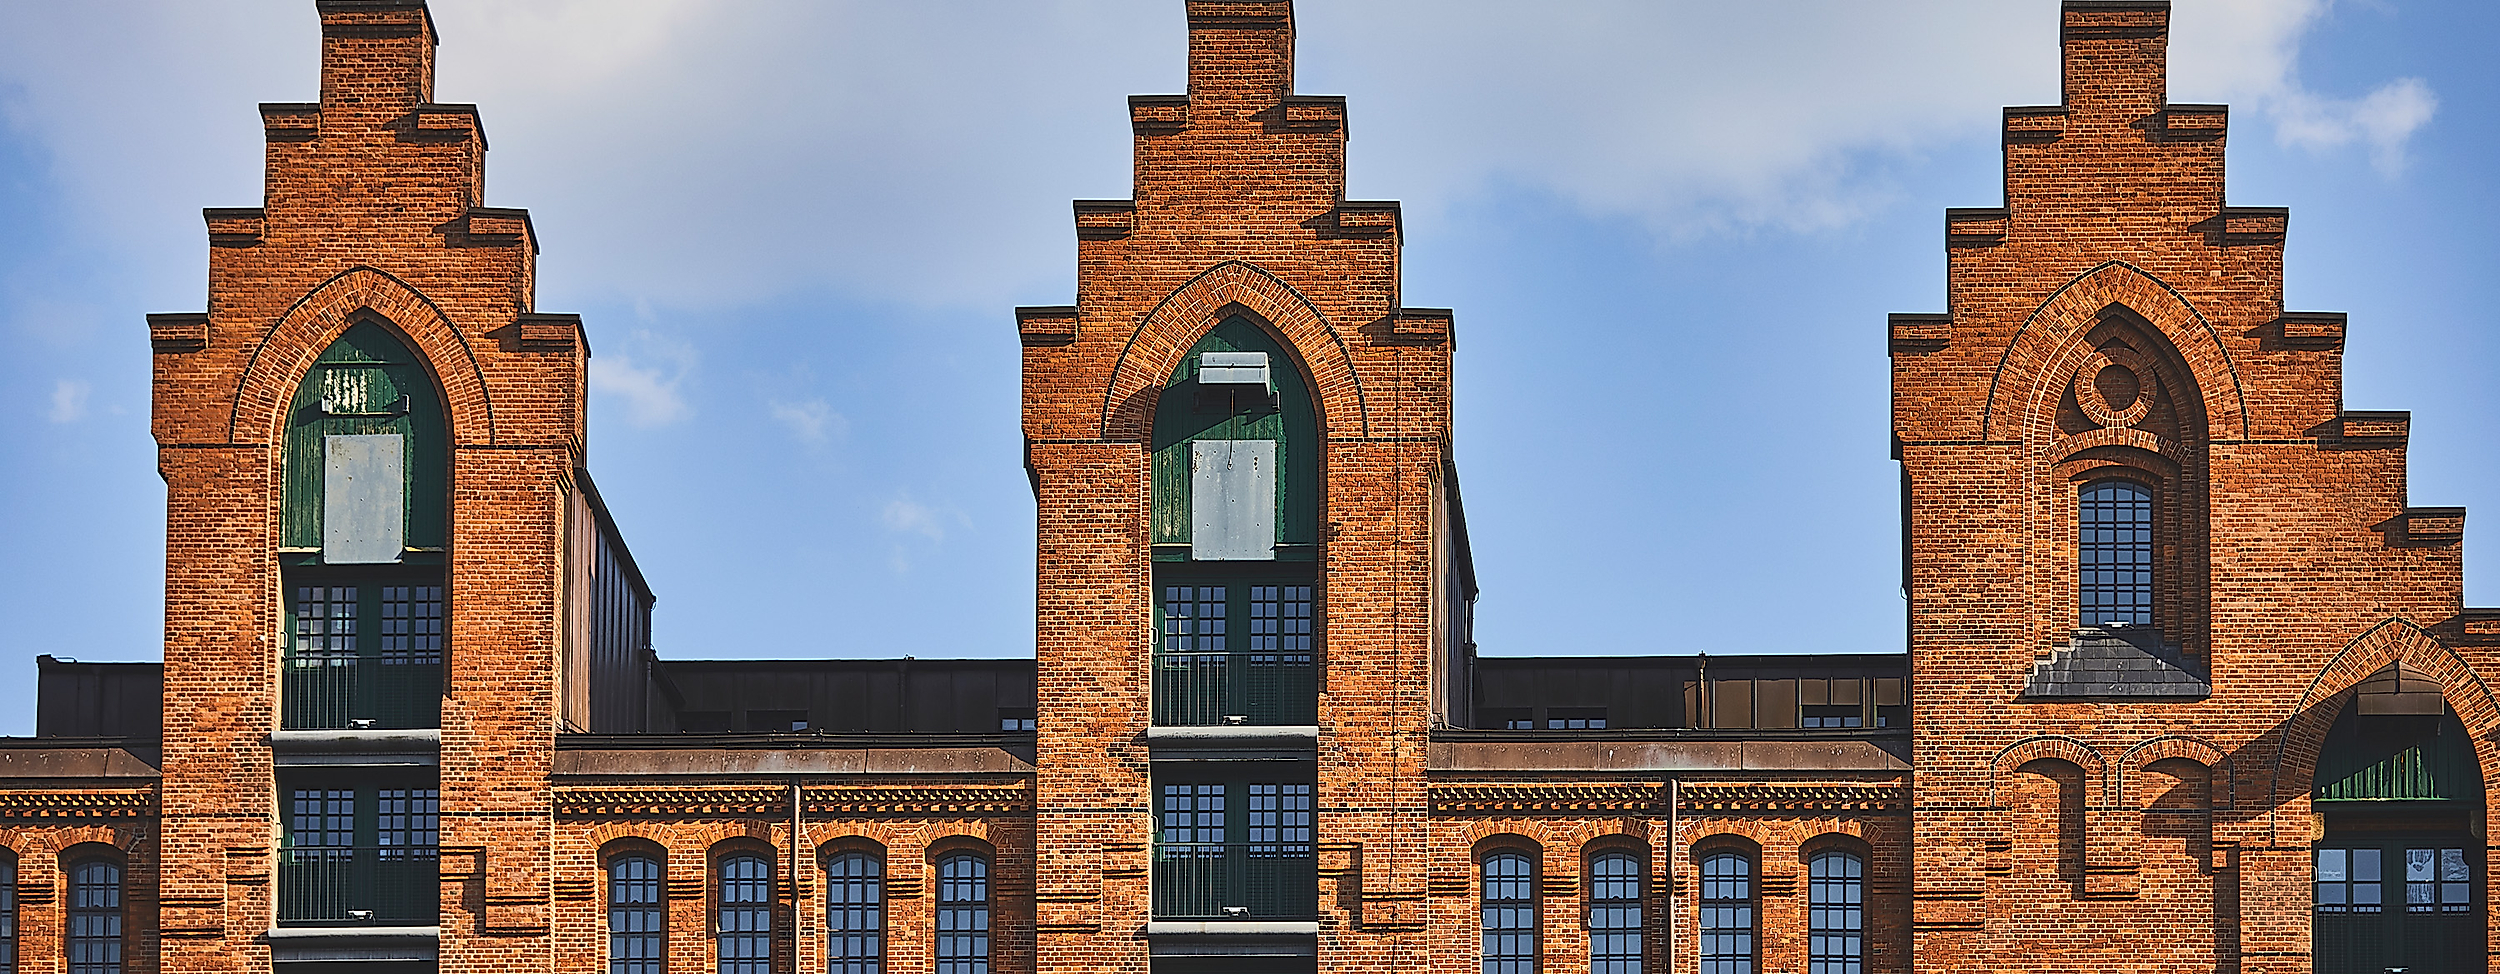 Internationales Maritimes Museum Hamburg